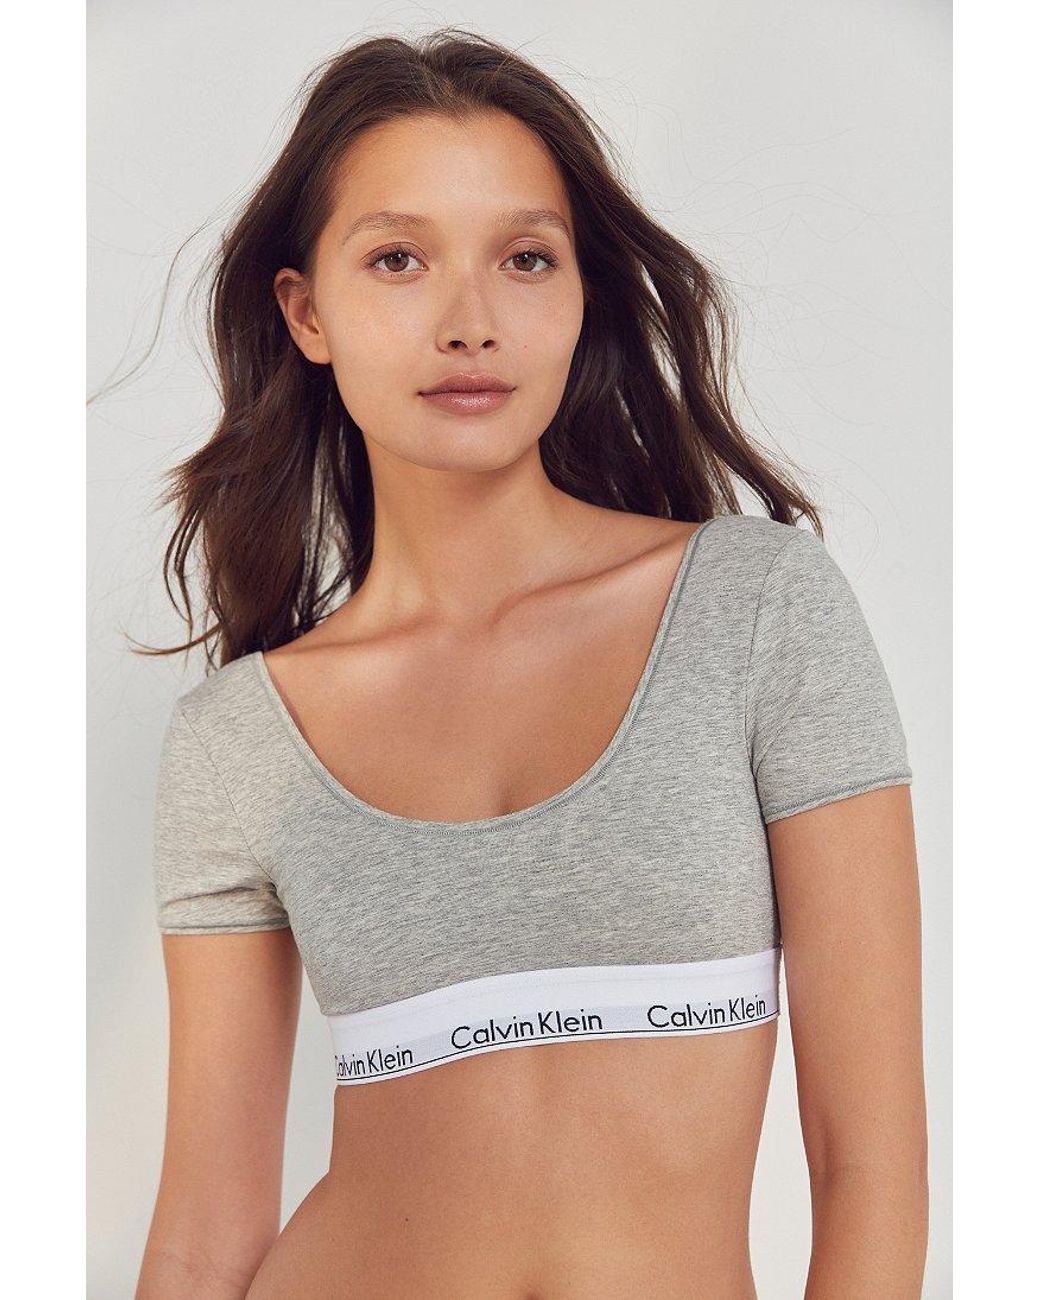 Calvin Klein Short Sleeve Bra Top in Gray